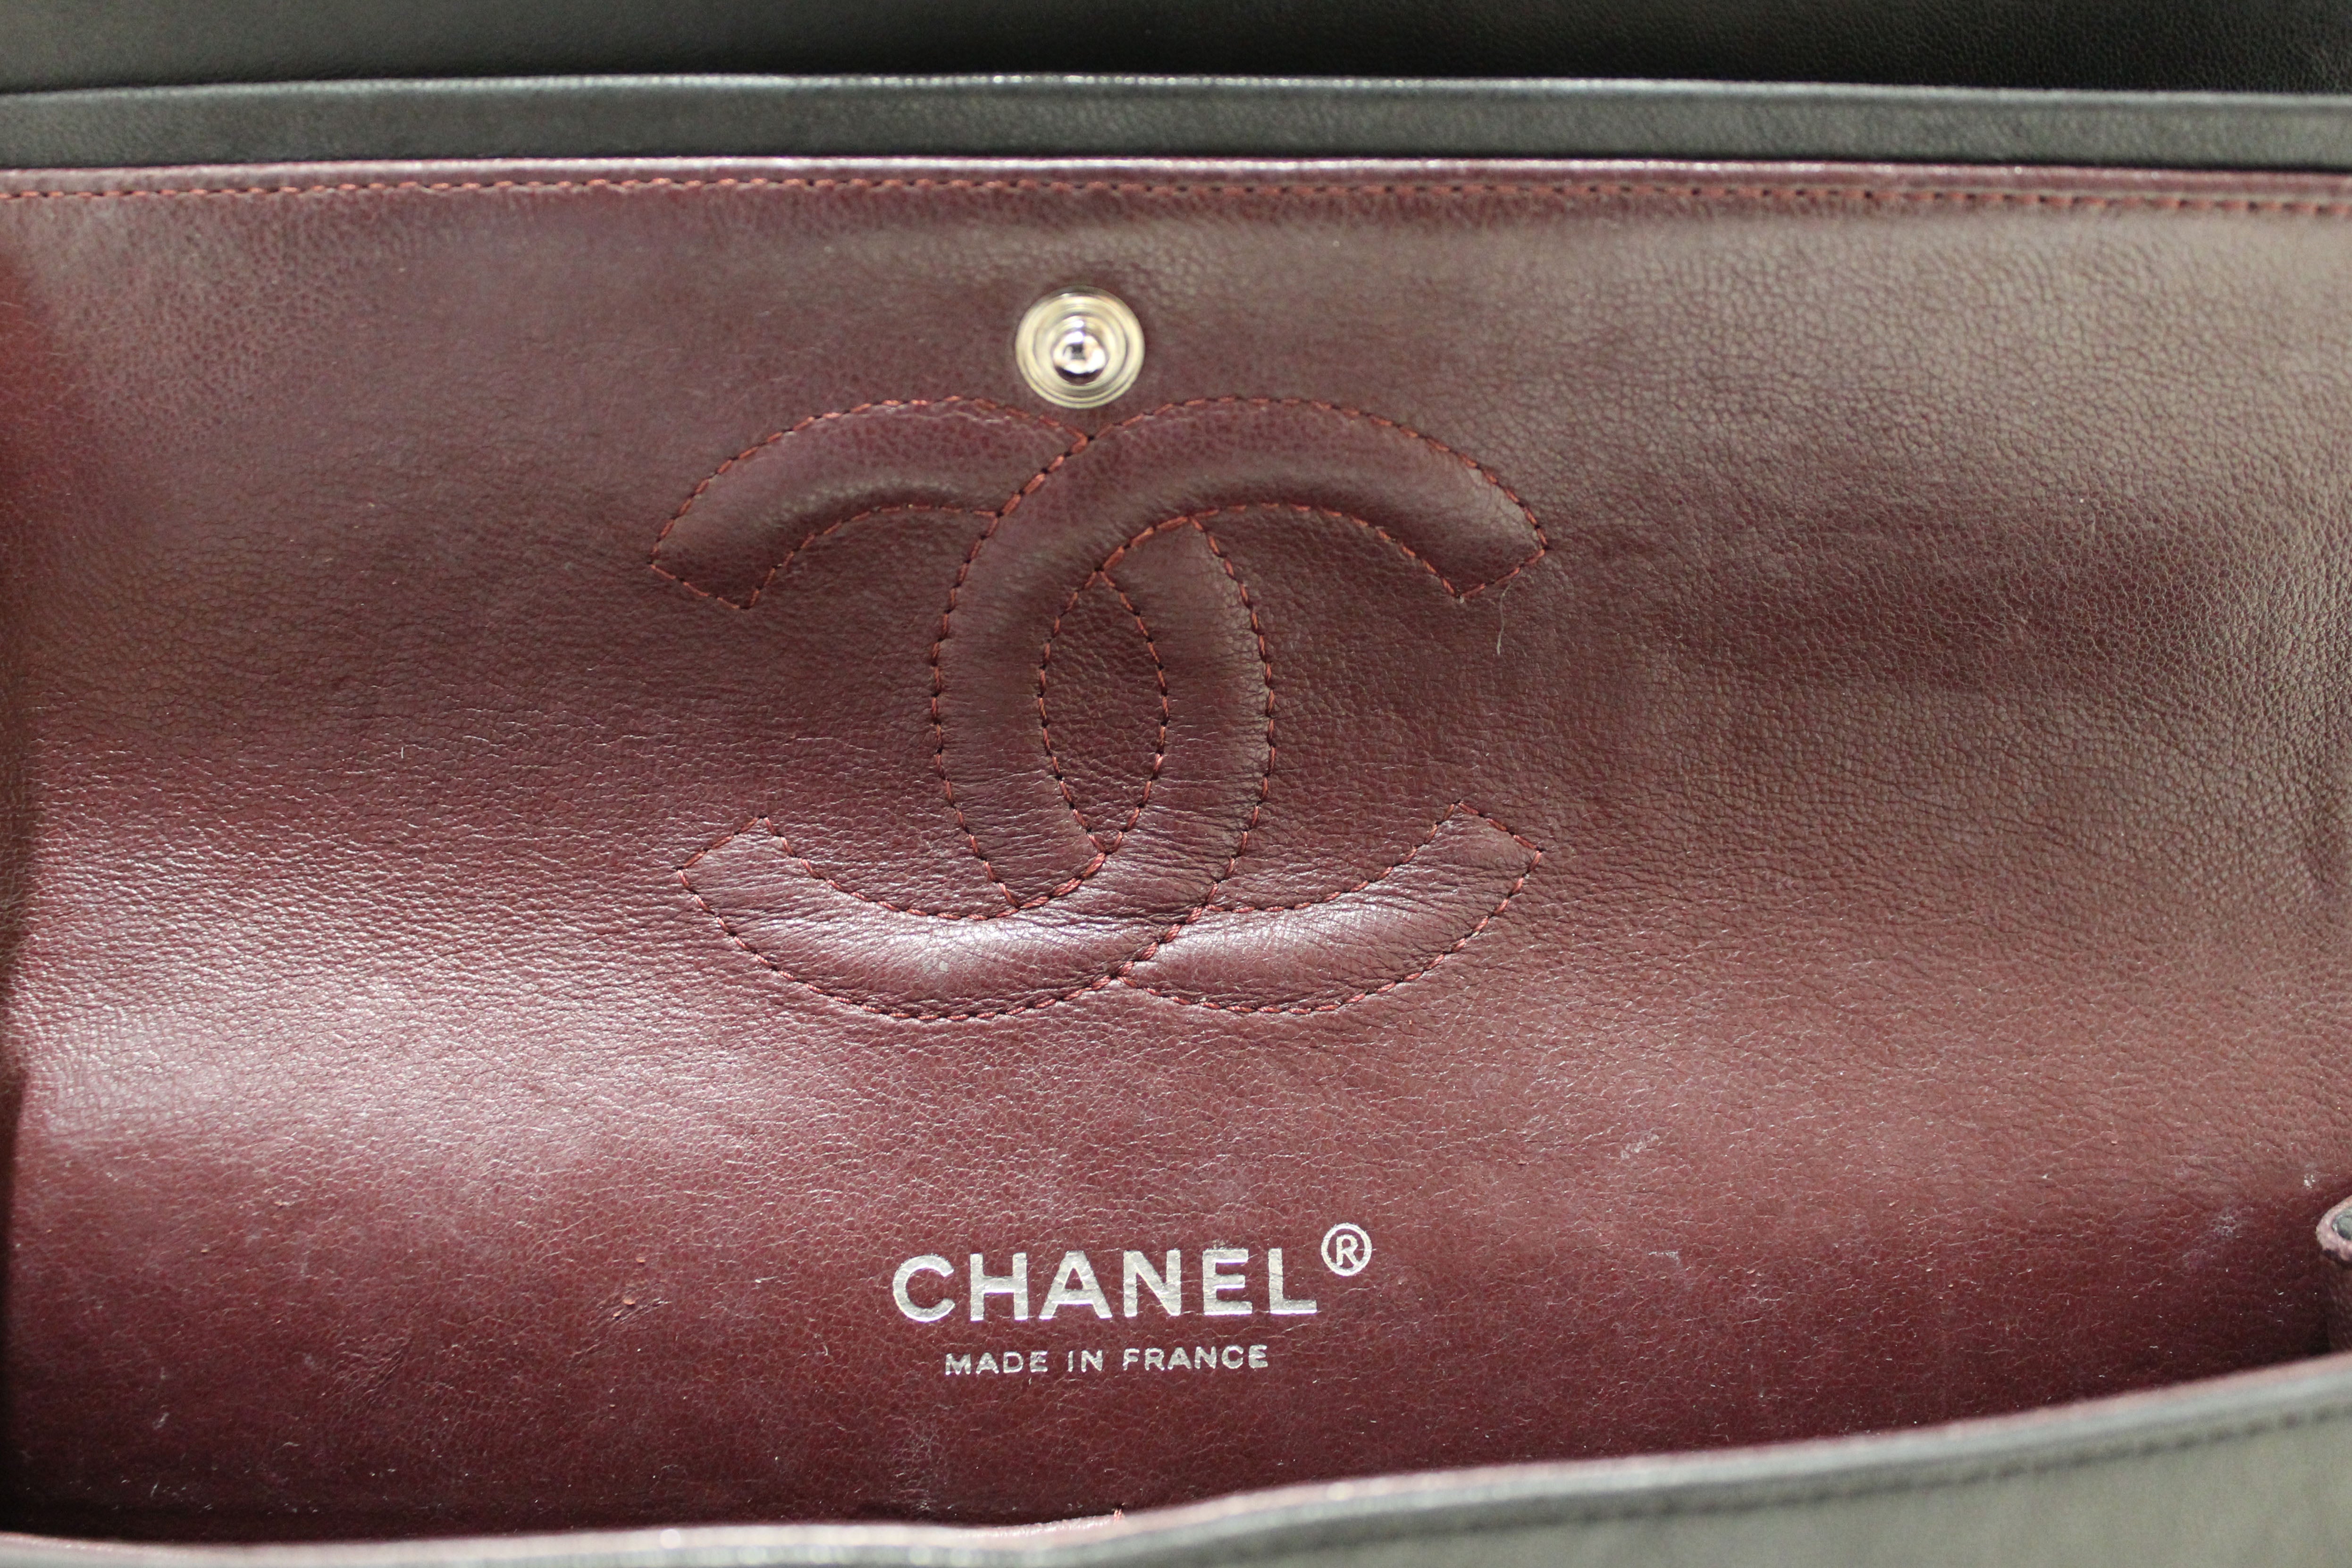 Authentic Chanel Black Lambskin Leather Medium Classic Flap Chain Bag